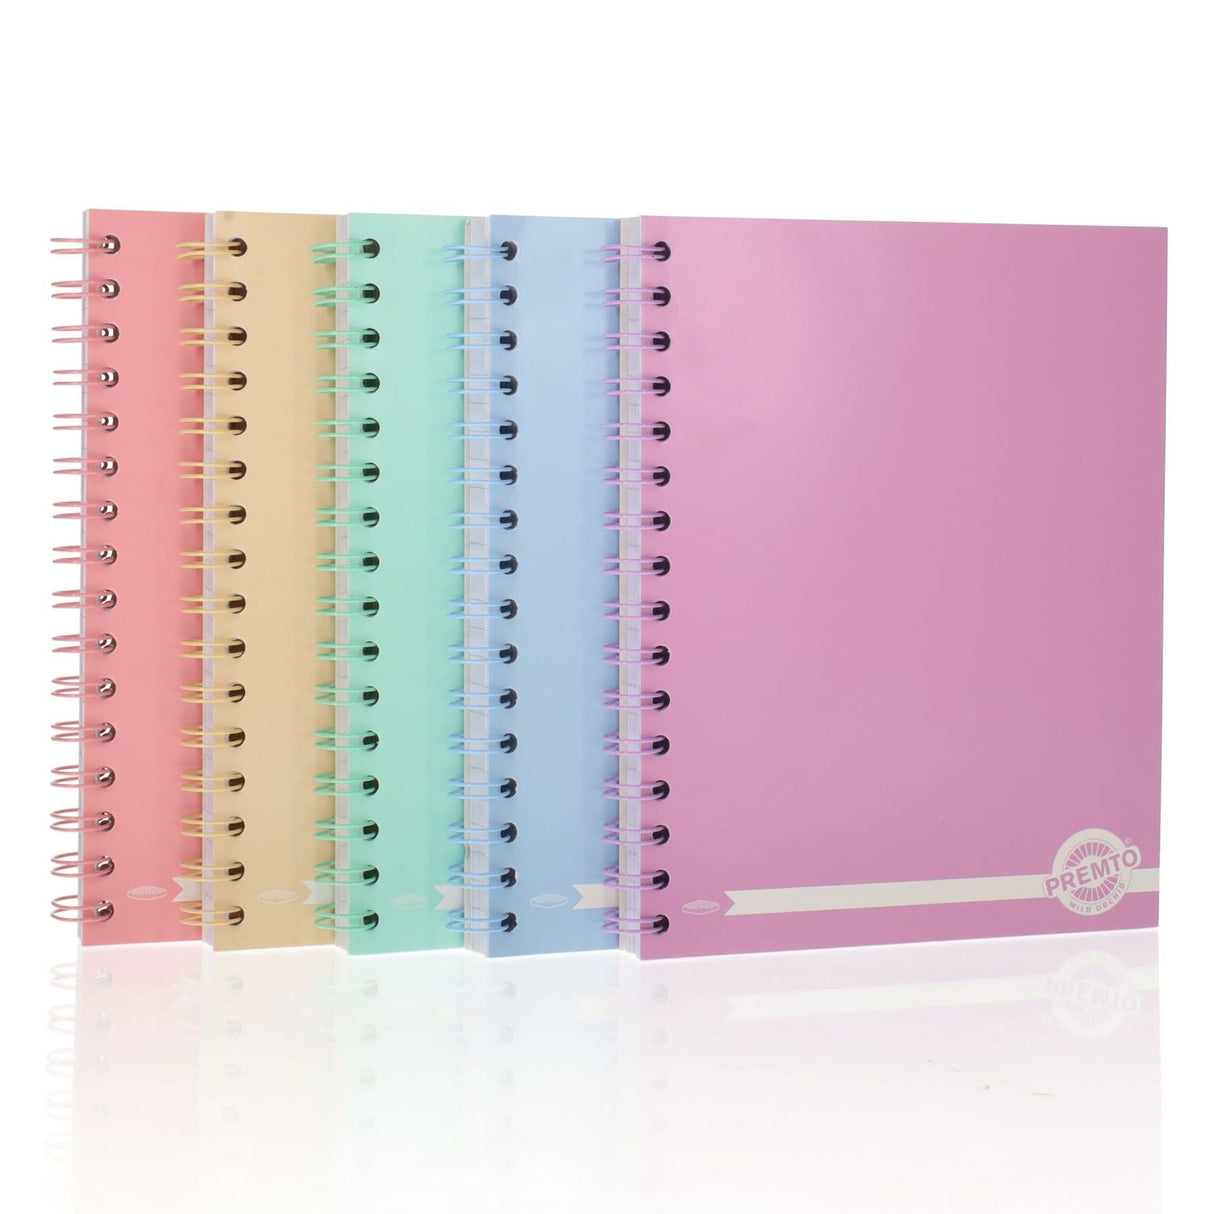 Premto Pastel A5 Wiro Notebook - 200 Pages - Mint Magic-A5 Notebooks-Premto|StationeryShop.co.uk